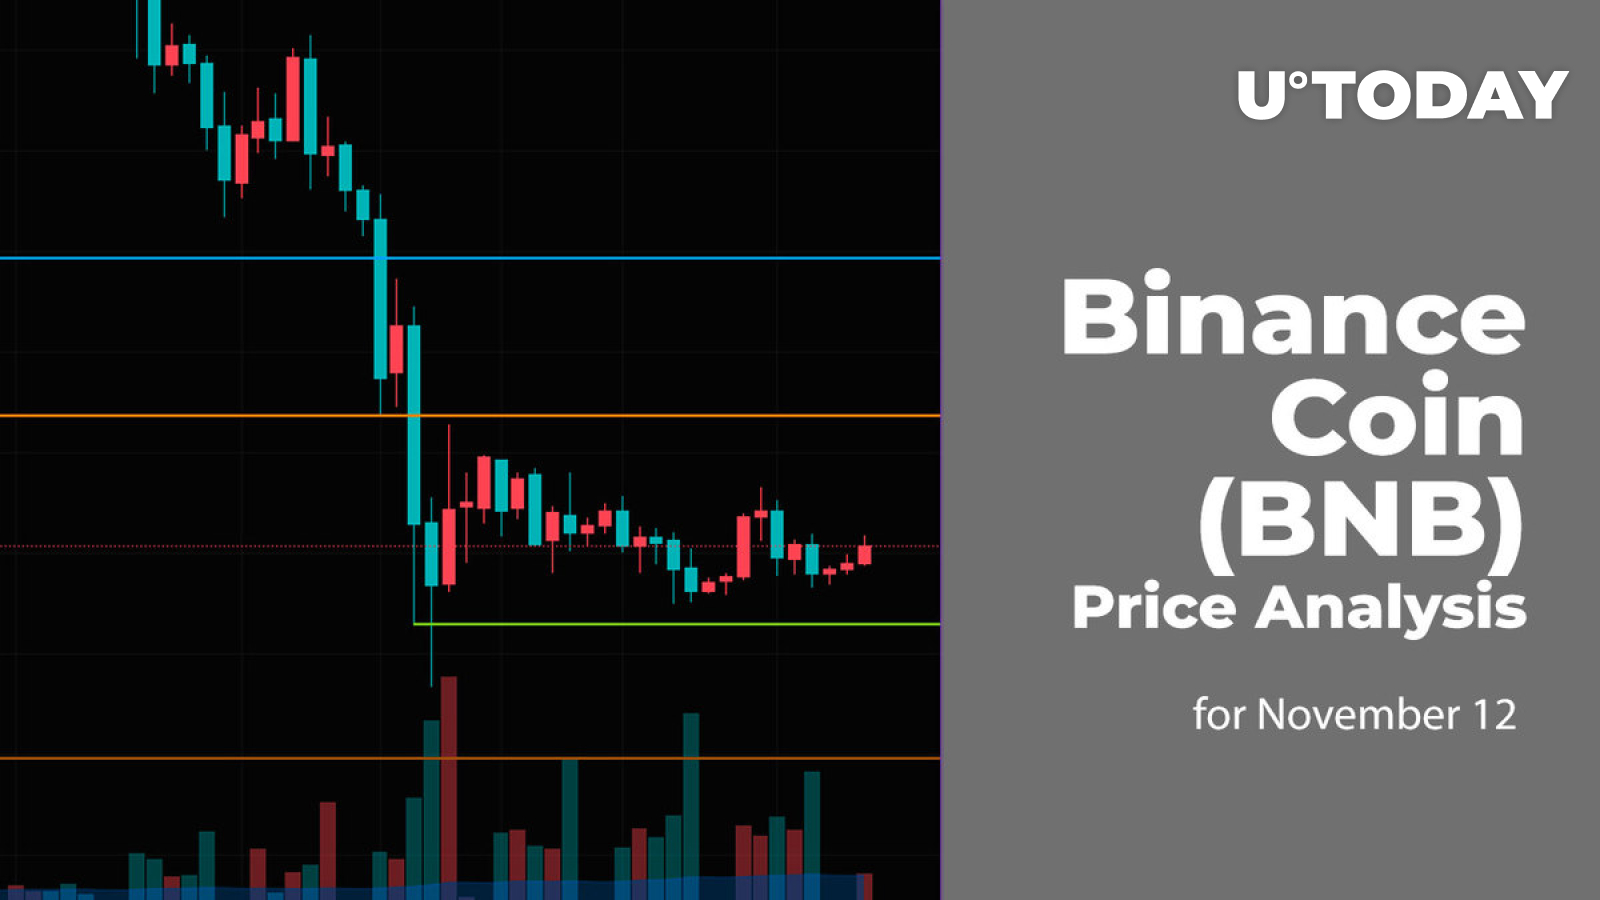 Binance Coin (BNB) Price Analysis for November 12